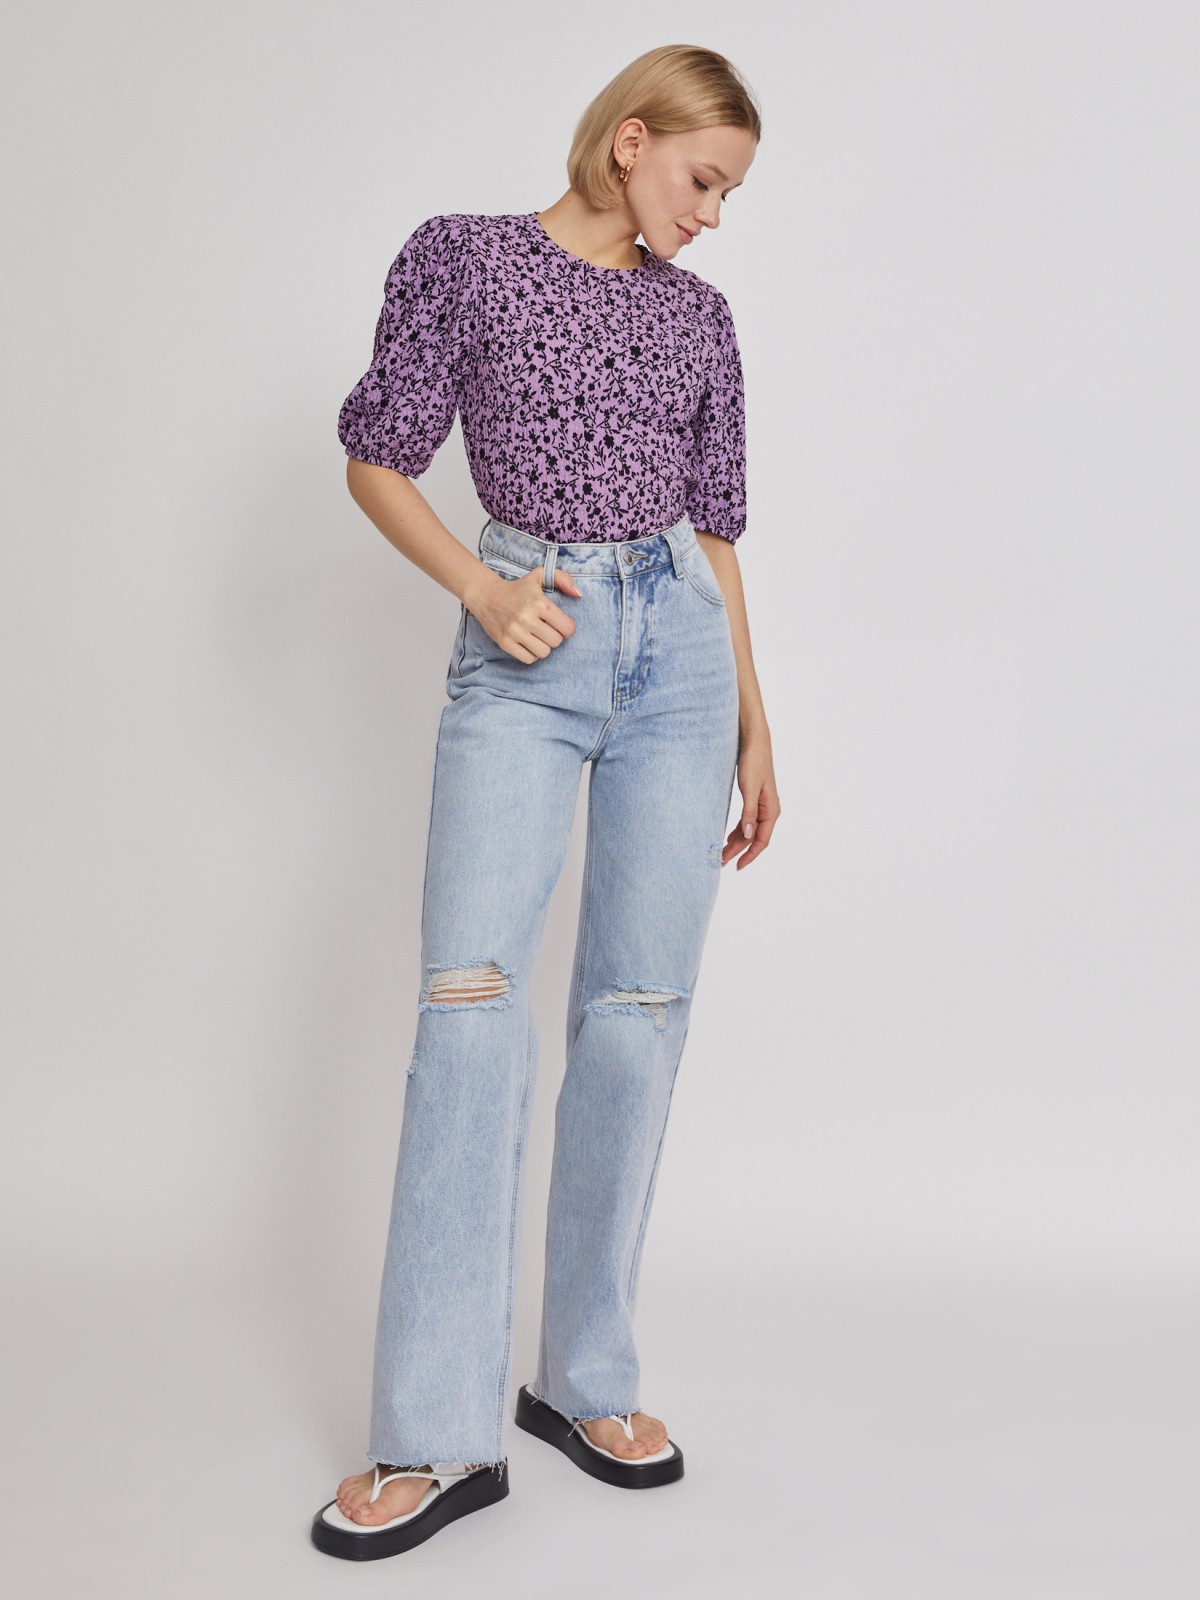 Топ-блузка с коротким рукавом zolla 02321122L041, цвет лиловый, размер XS - фото 2